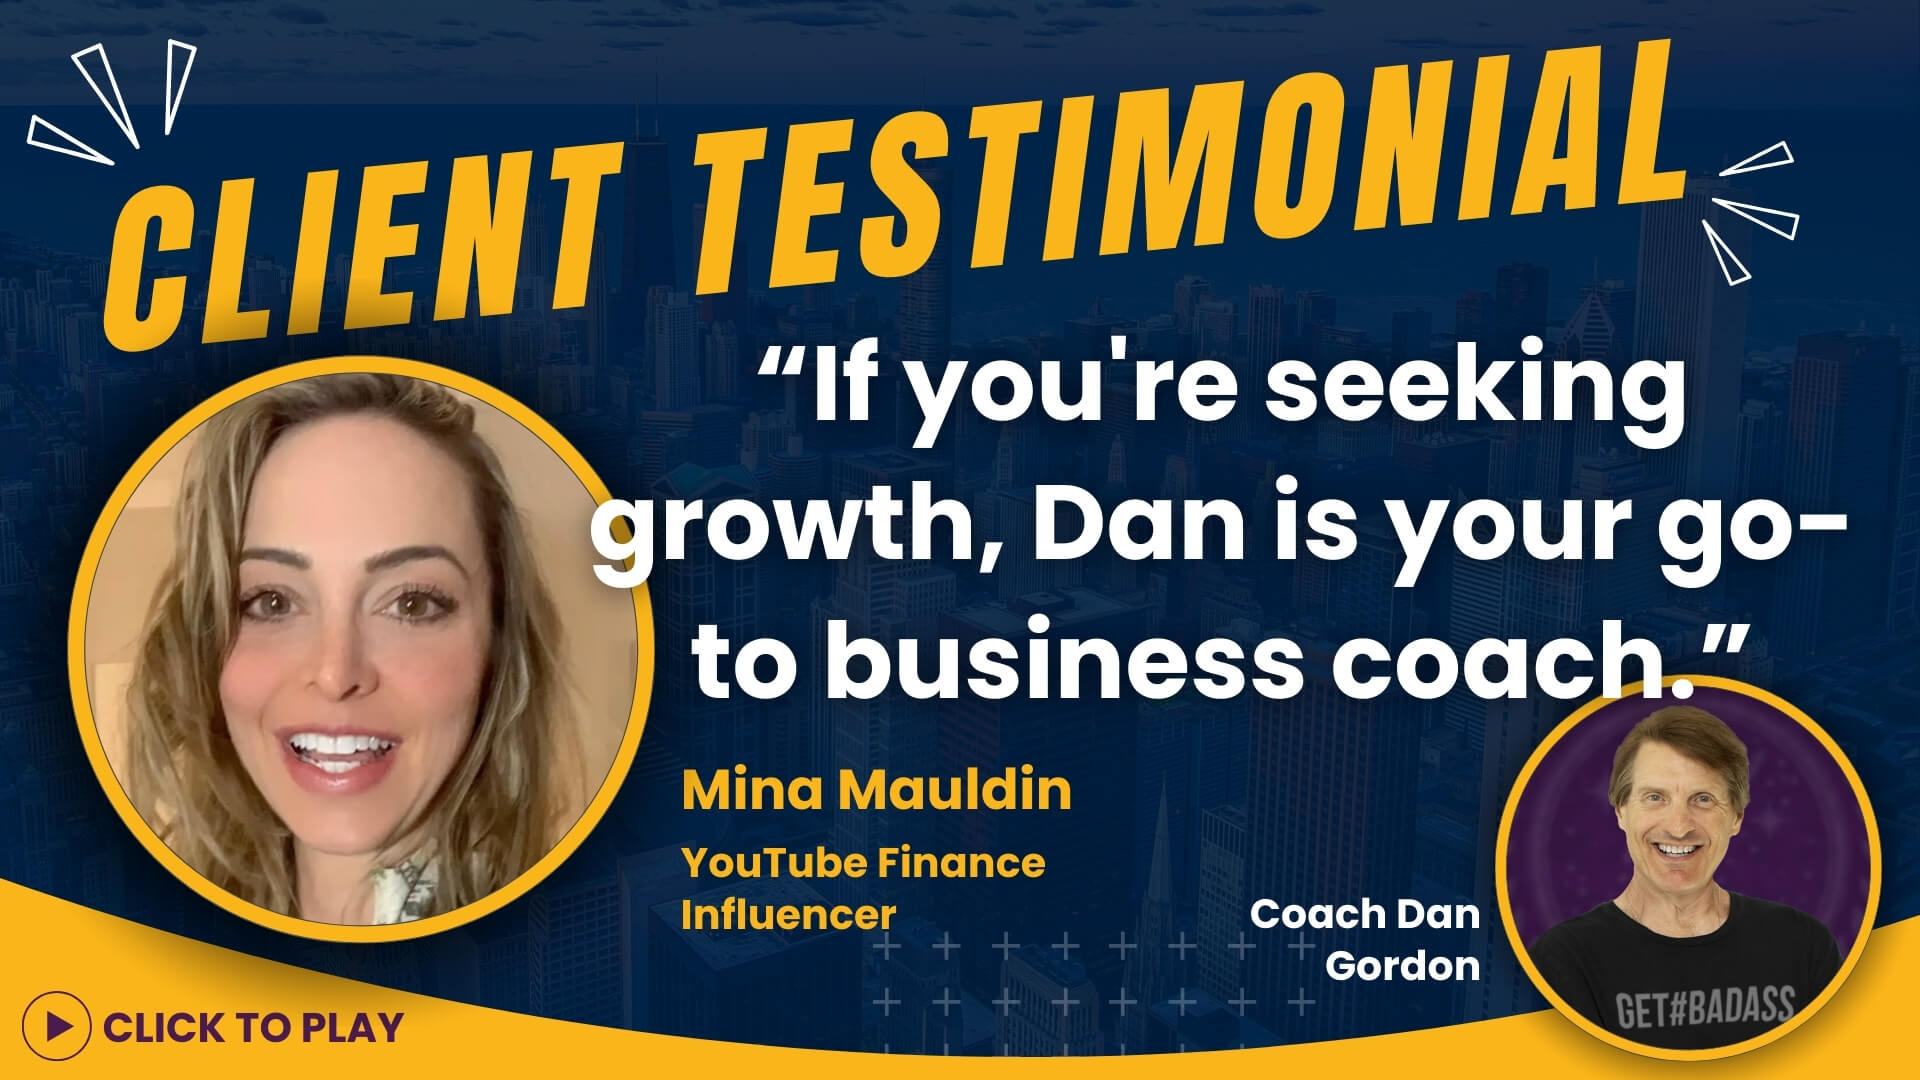 A positive client testimonial from Mina Mauldin, a YouTube Finance Influencer, praising Coach Dan Gordon's guidance.